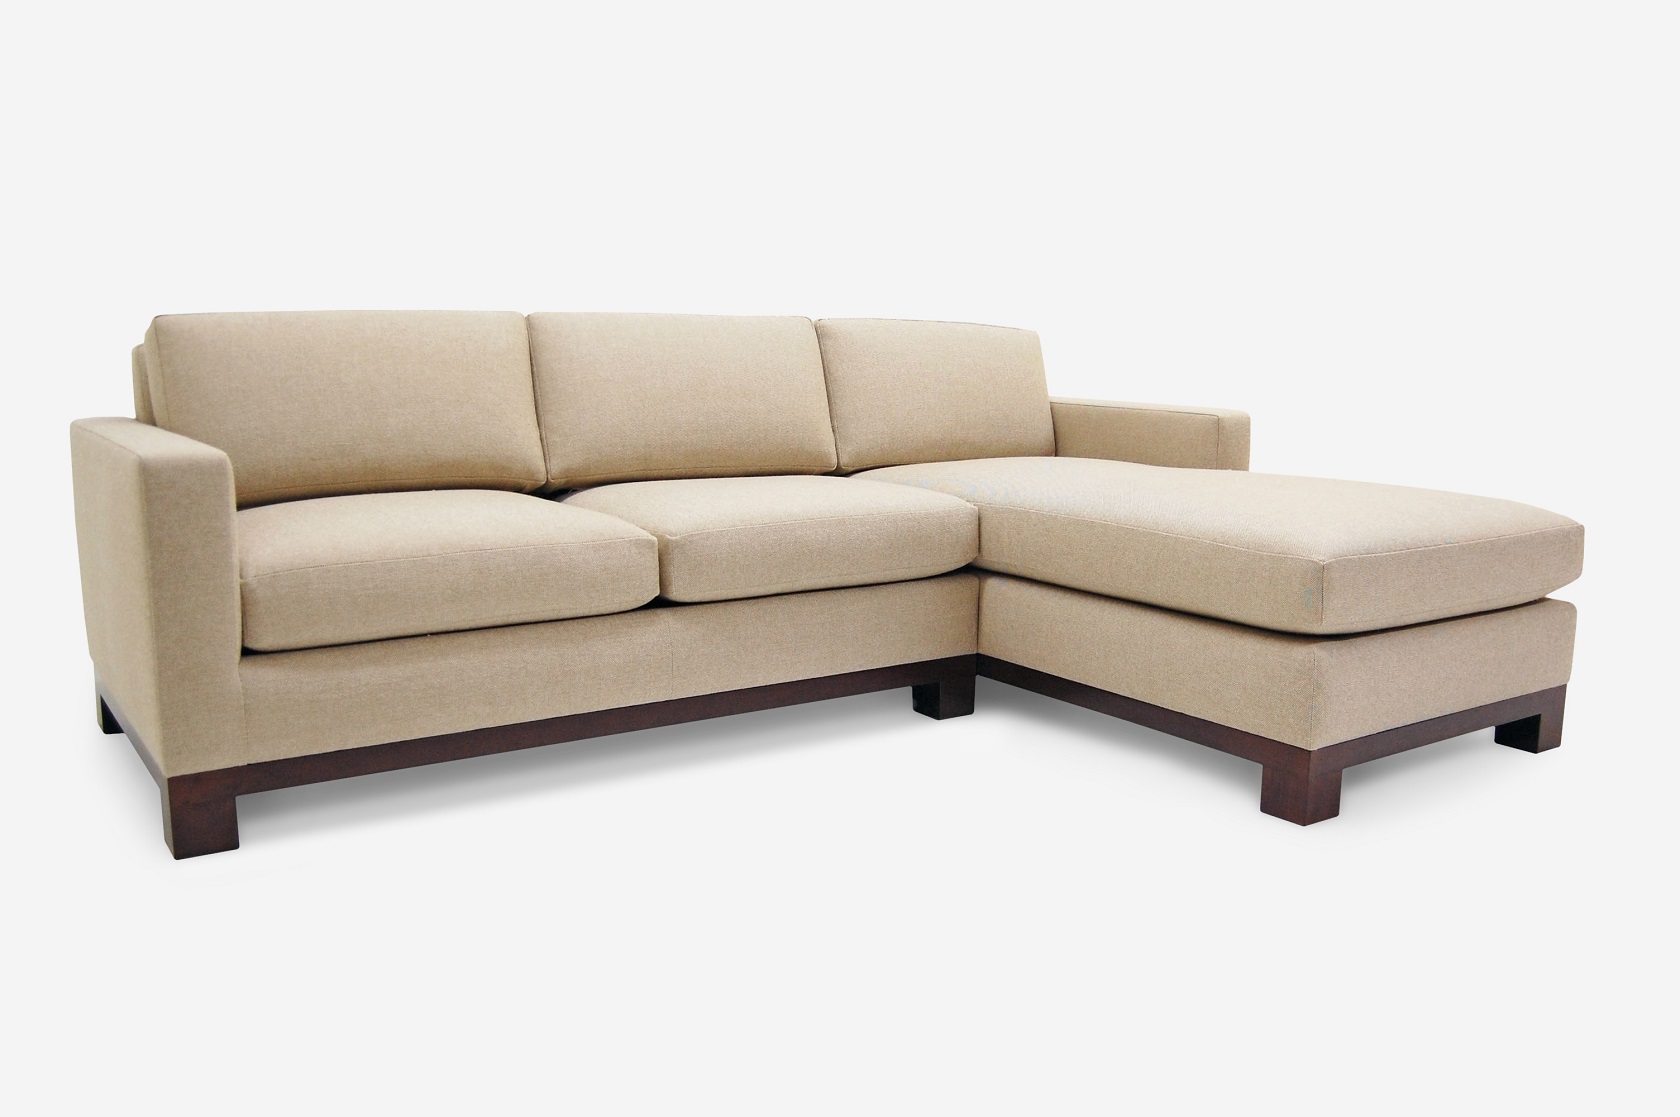 ROOM Amy Crain Maxwell Sleeper Sofa collection Kiln-Dried Hardwood Frame exposed base custom customizable made to order | ROOM furniture